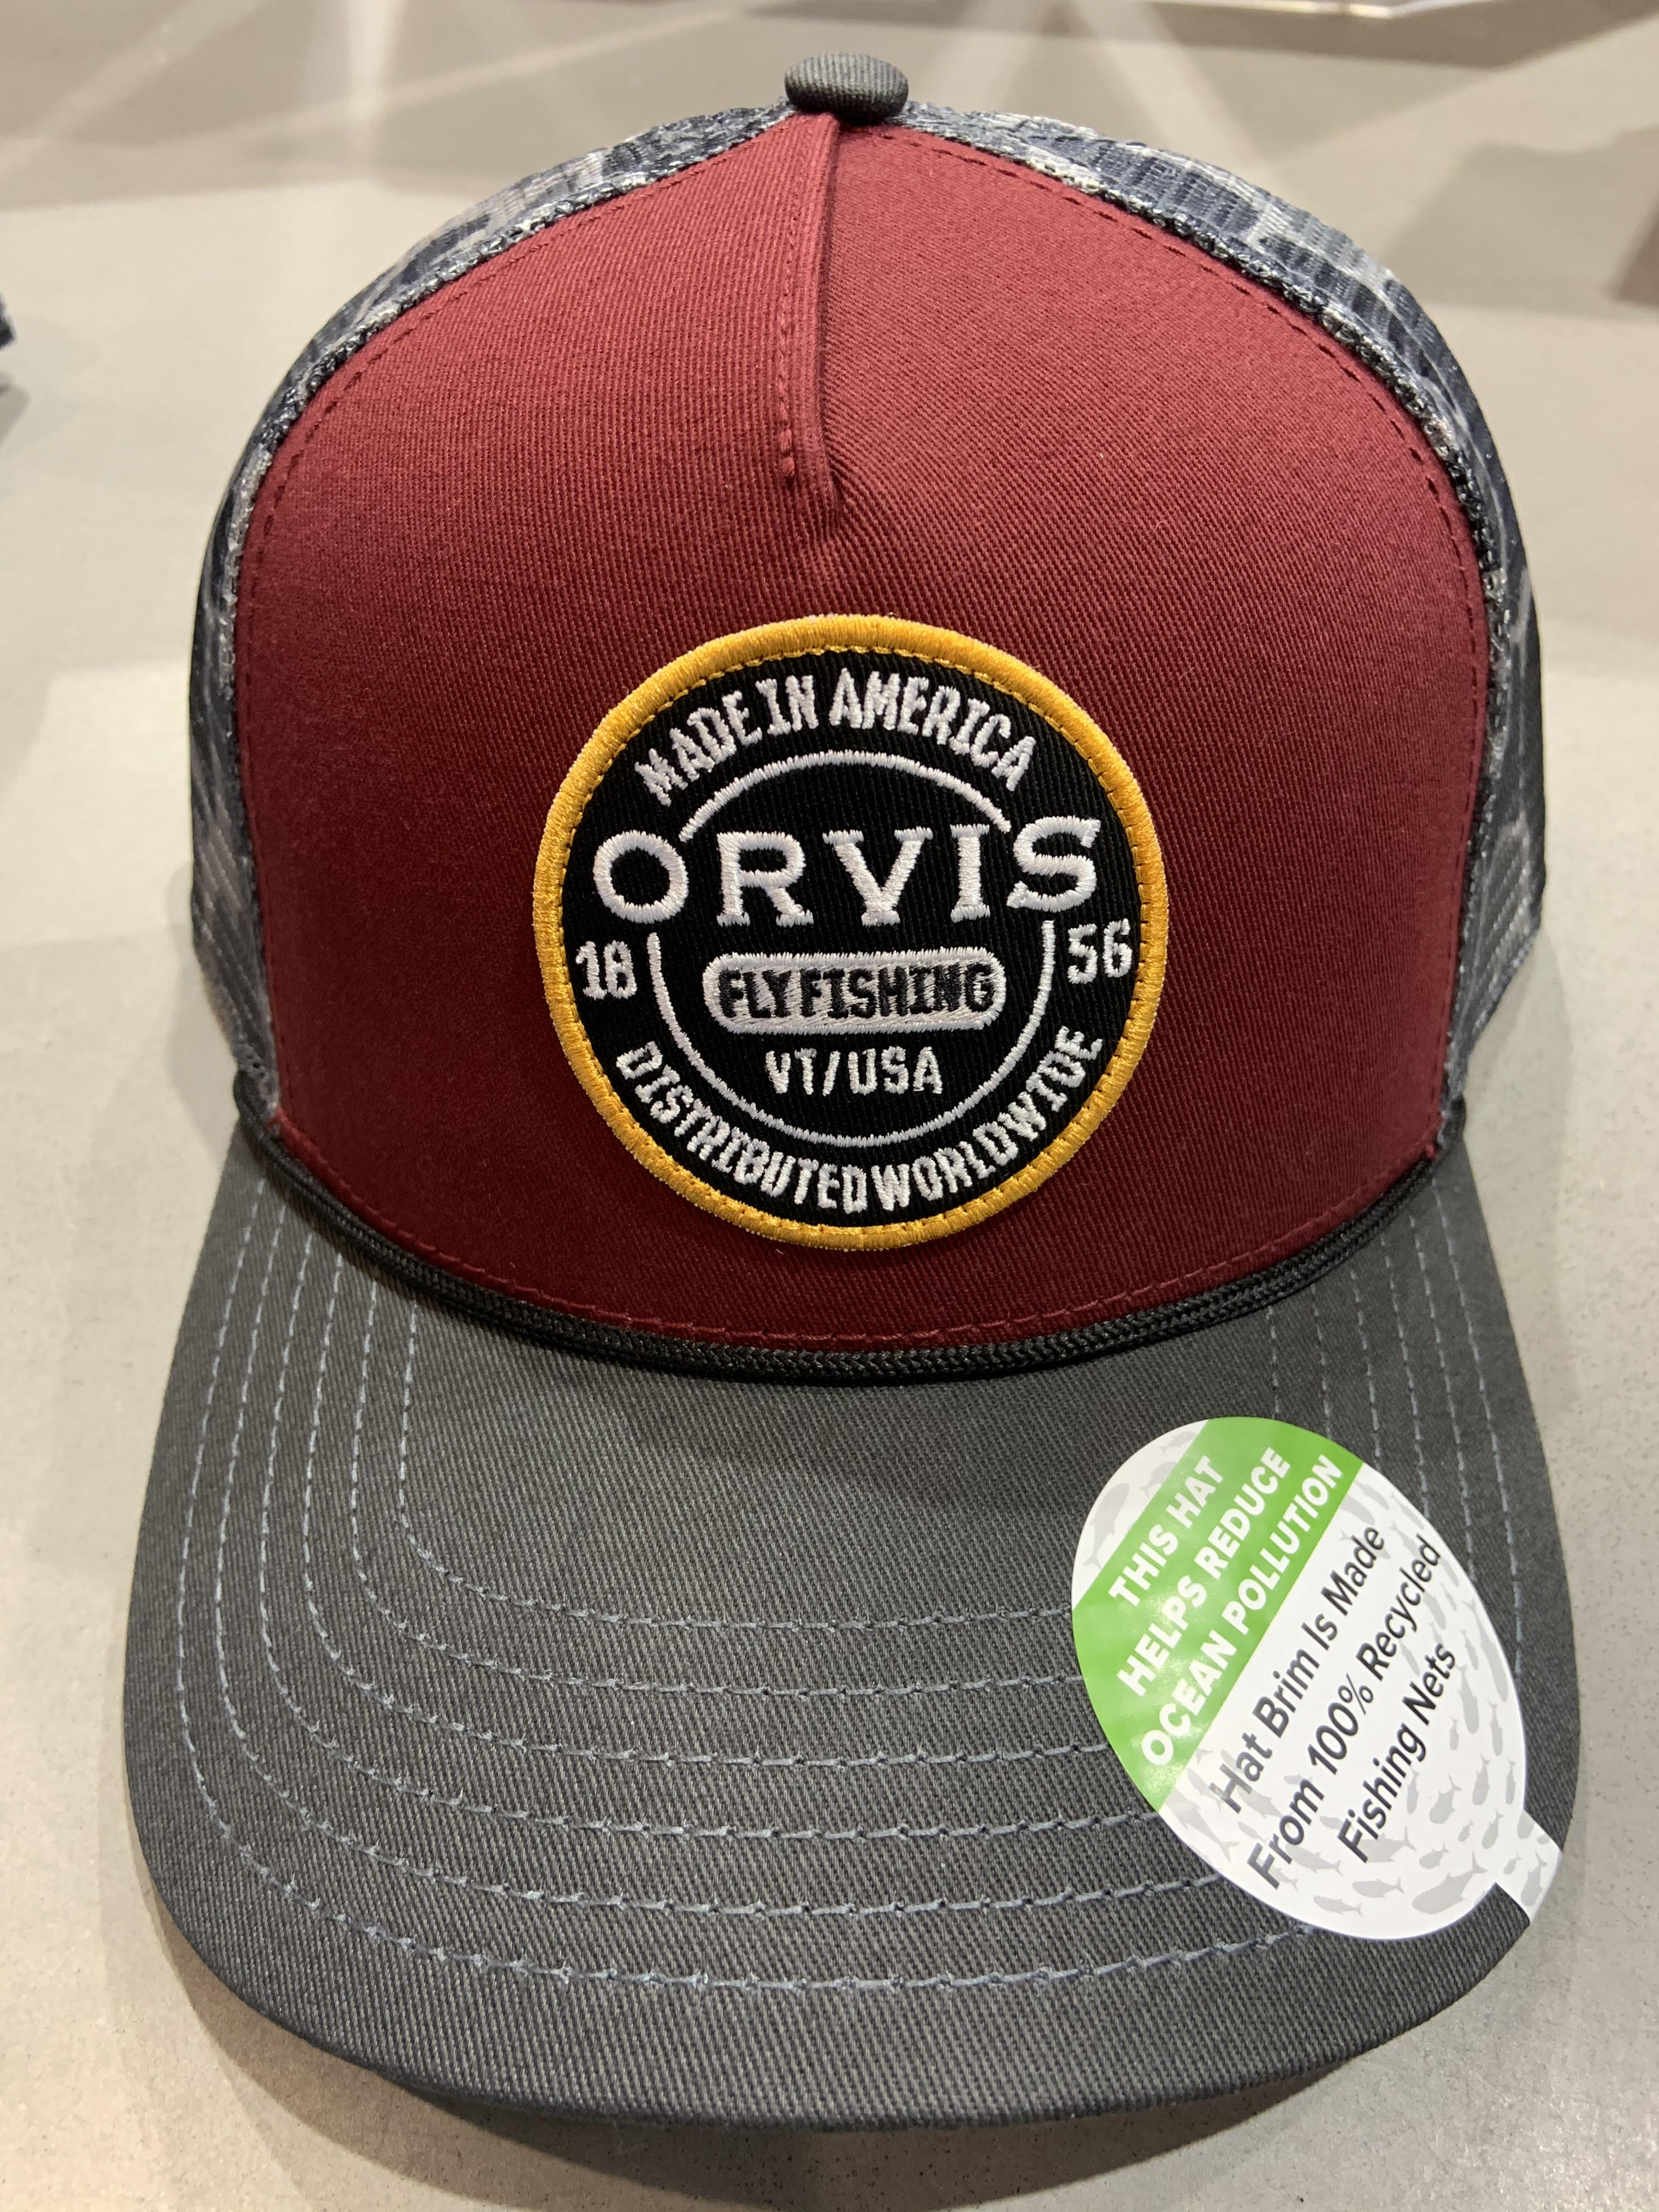 Orvis, Accessories, Orvis Camo Fishing Ball Cap